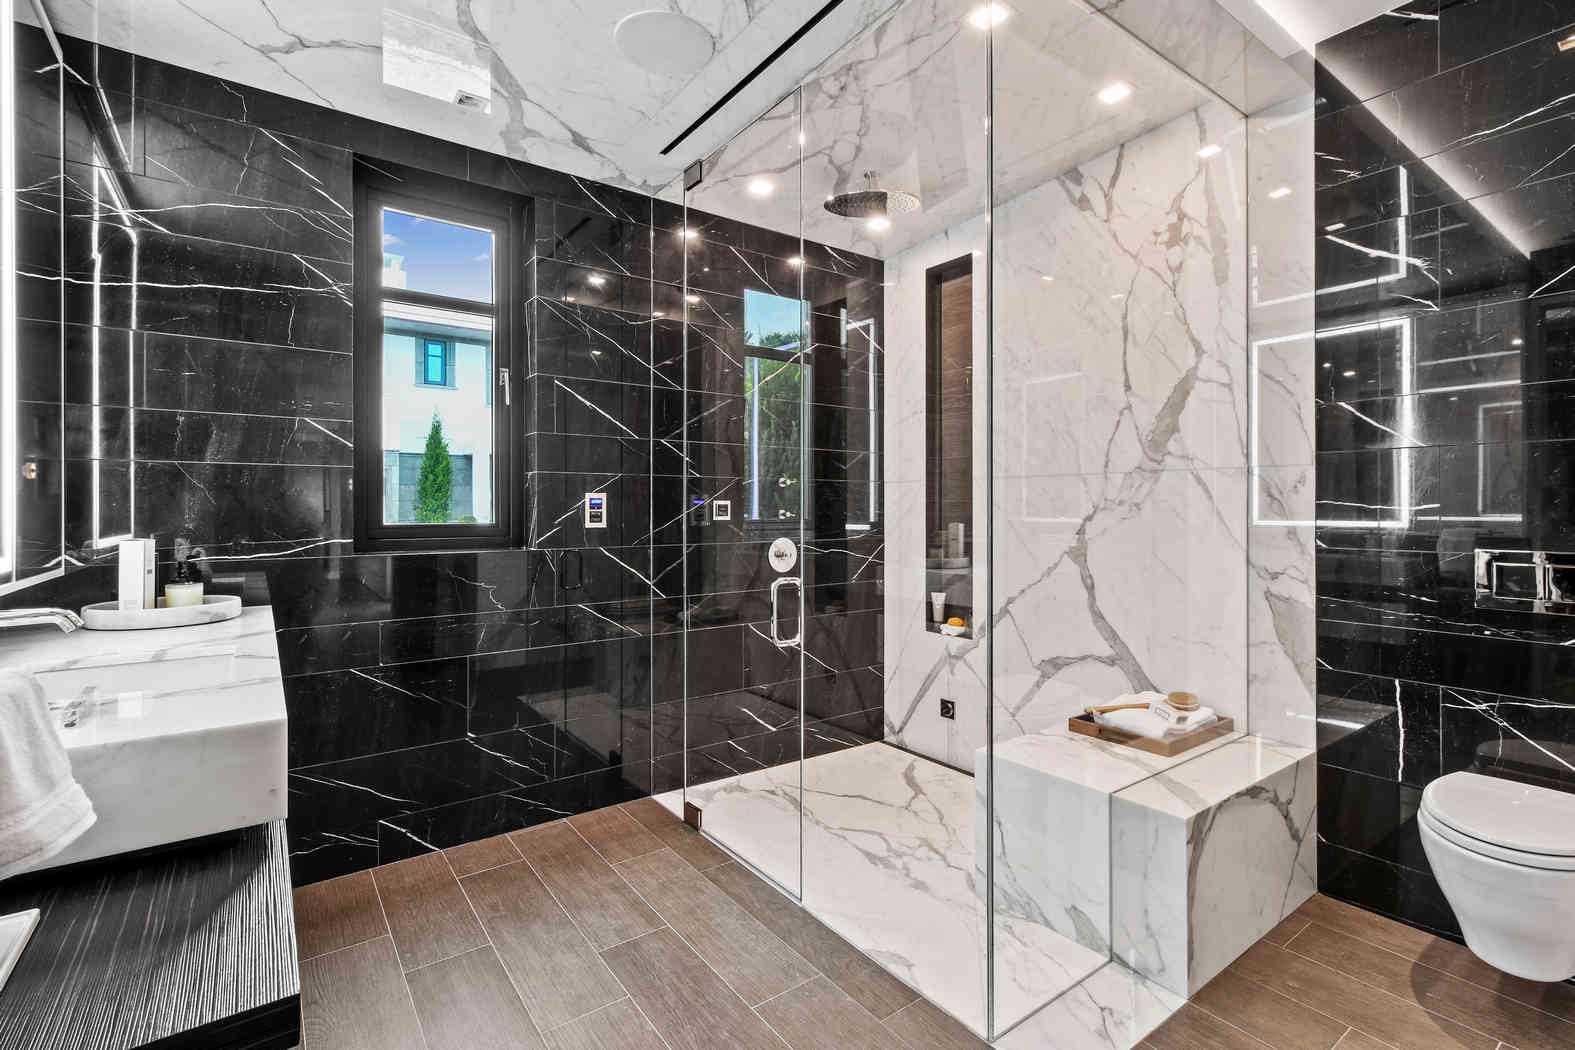 Master Bathroom Ideas - Residential Interior Design From DKOR Interiors